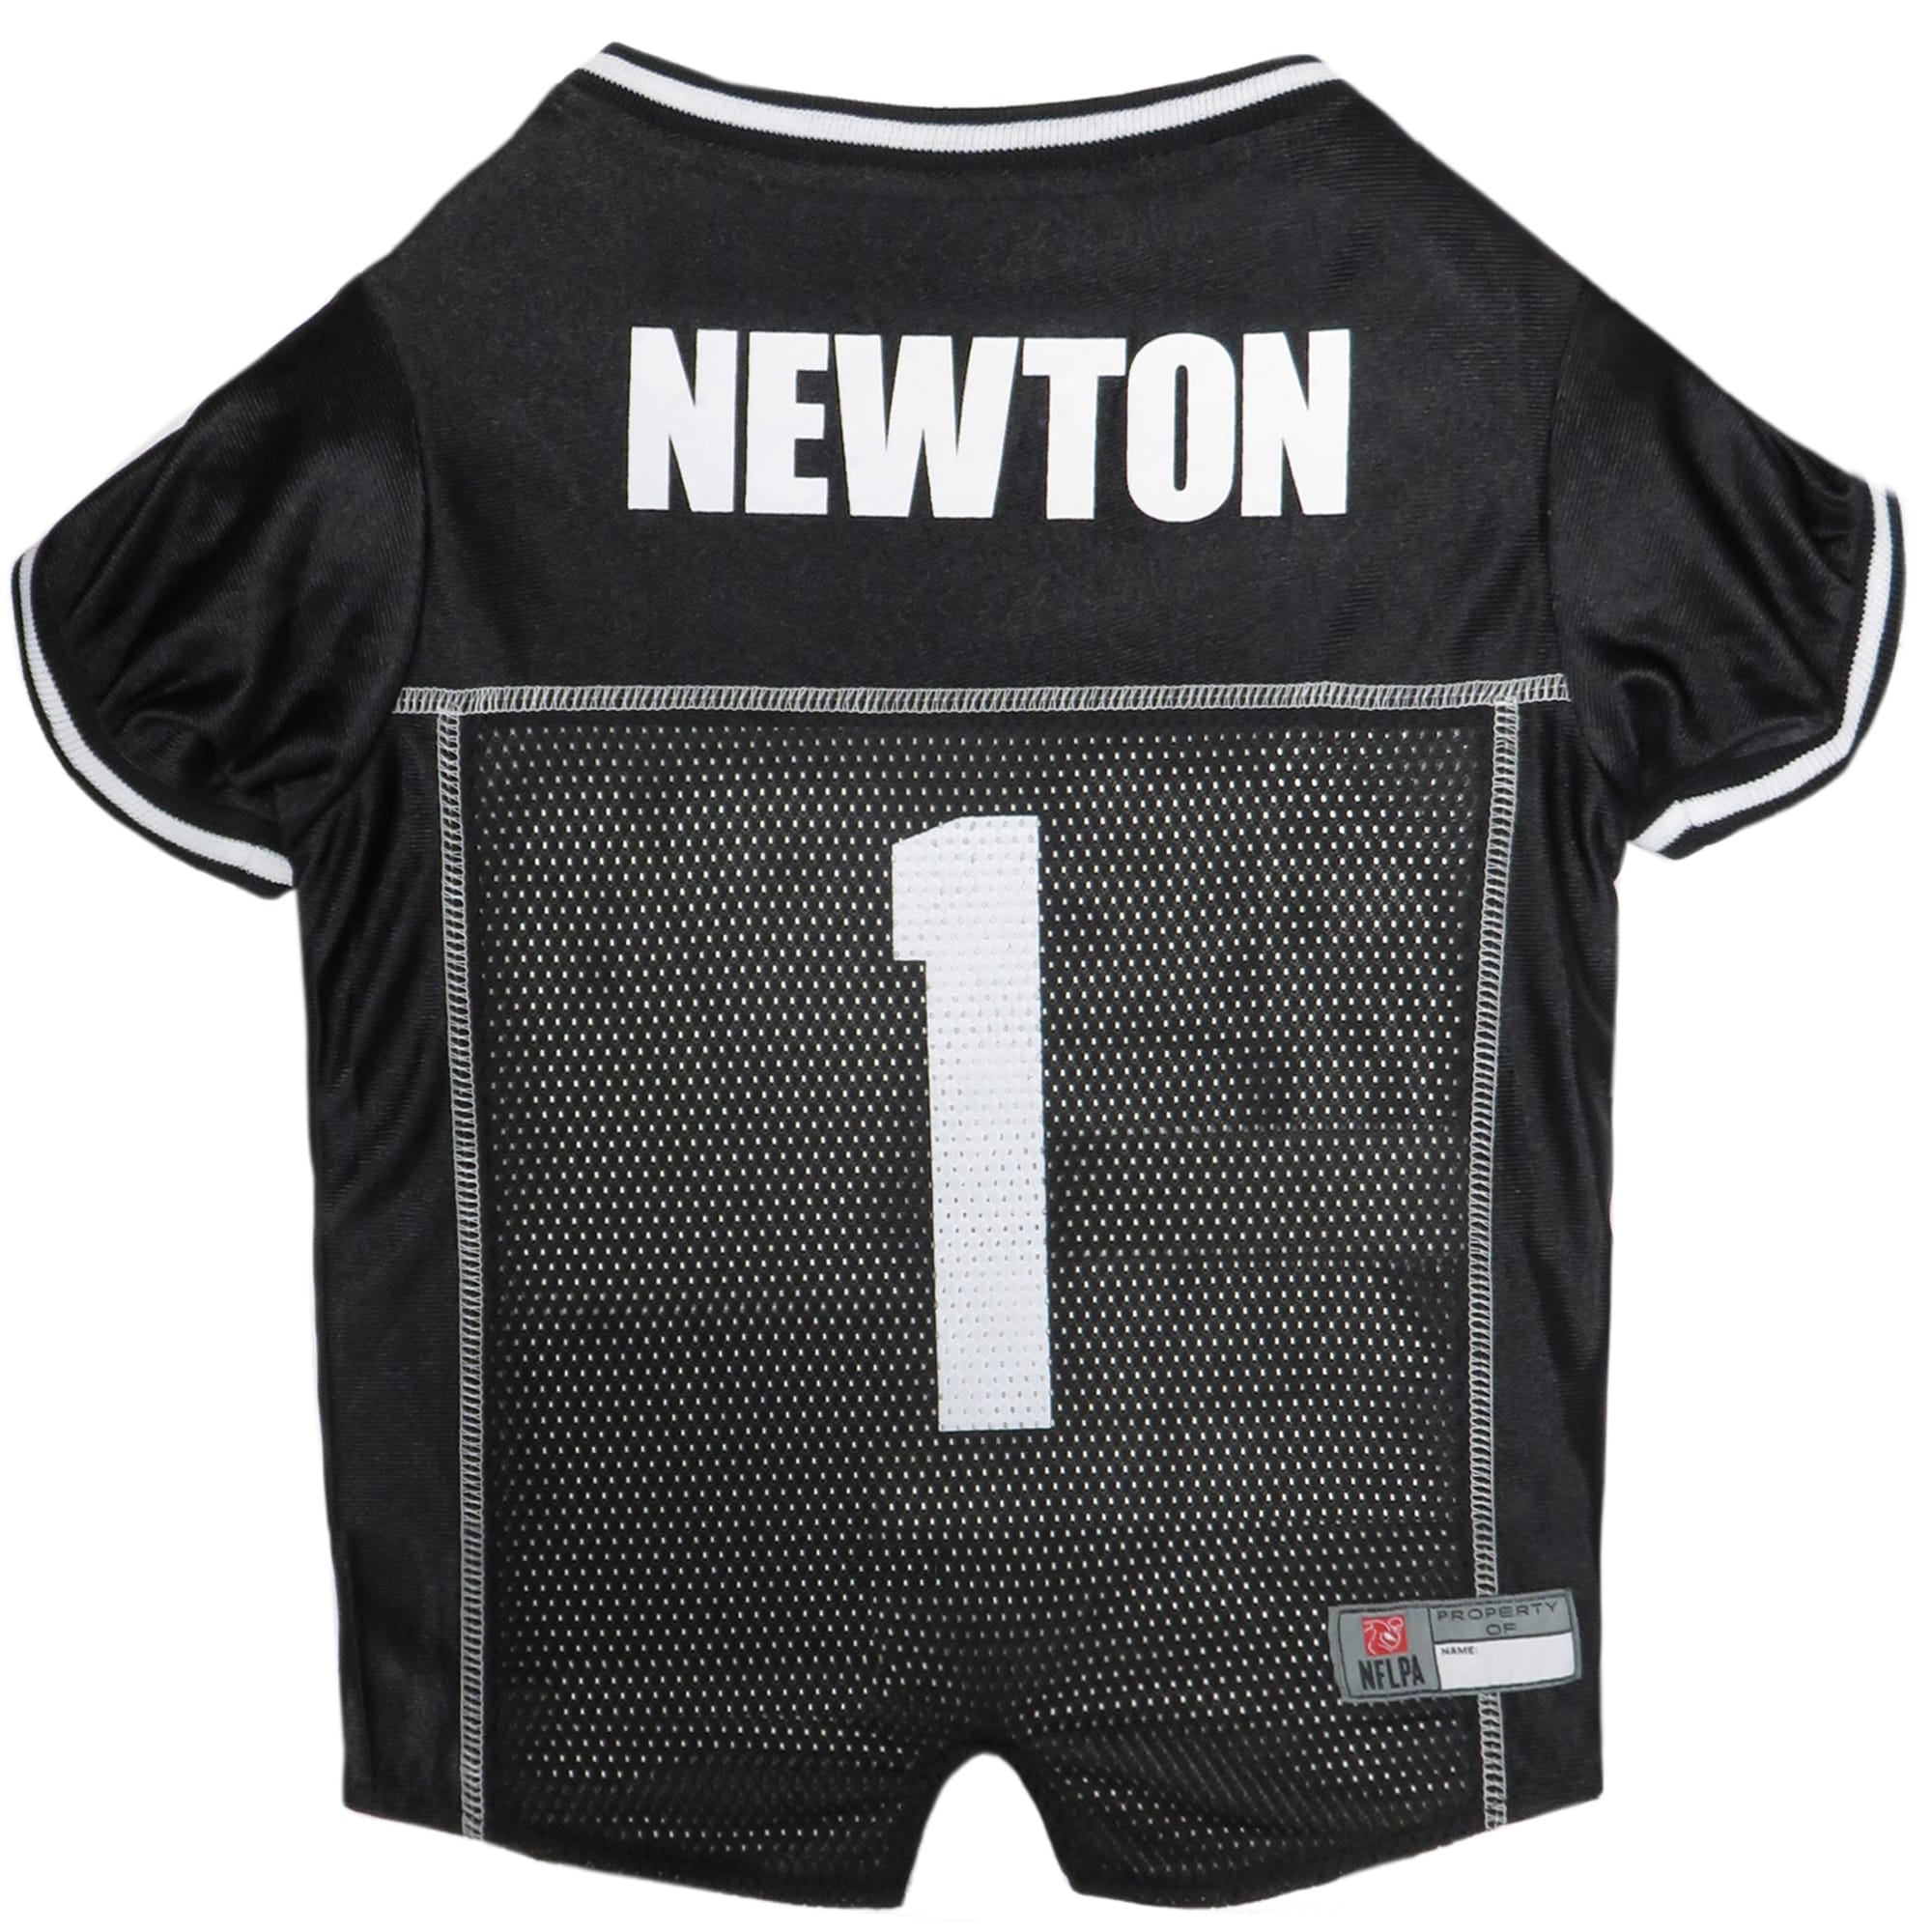 cam newton jersey small